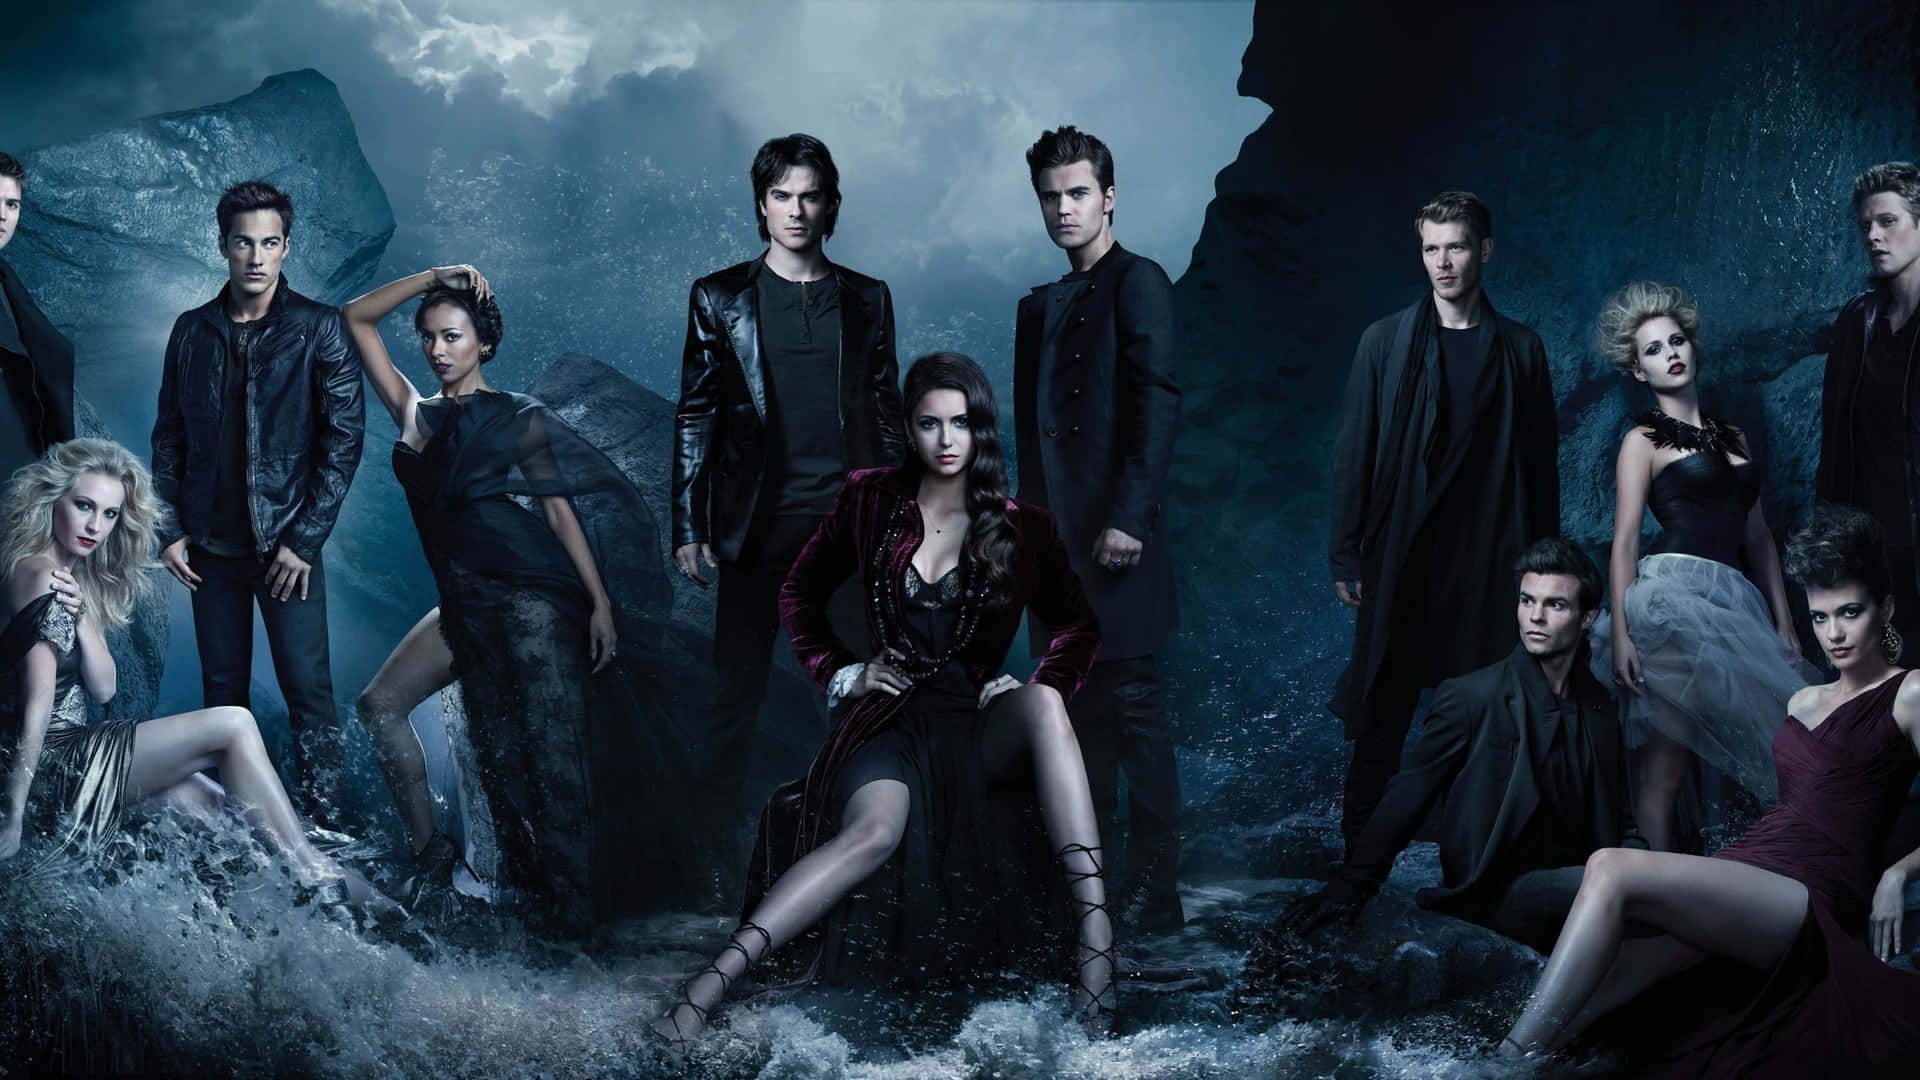 The Cast of Vampire Diaries on Your Desktop Wallpaper